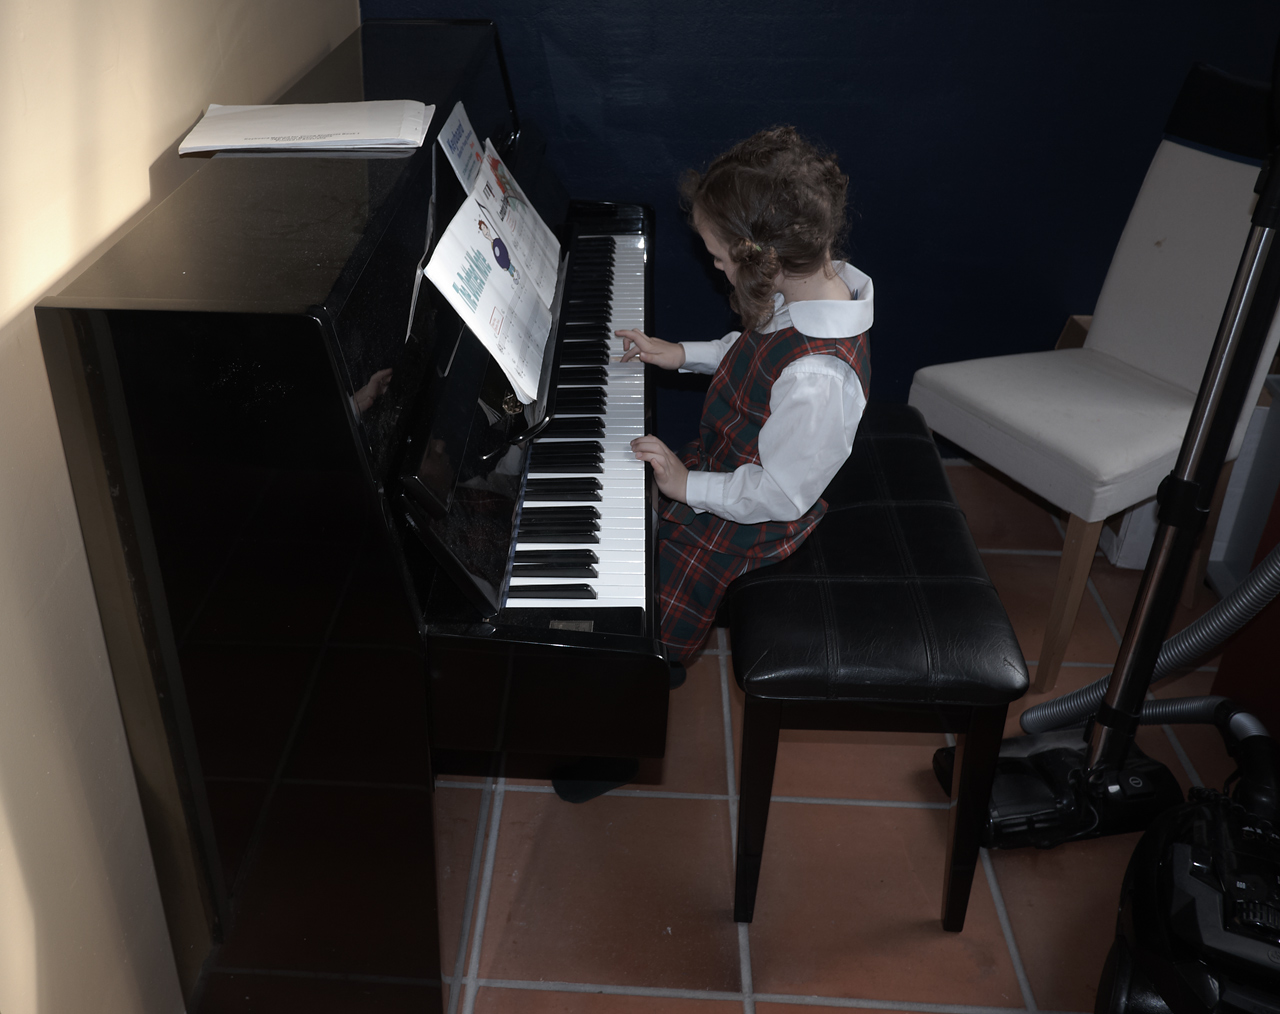 Sophia practicing piano before school